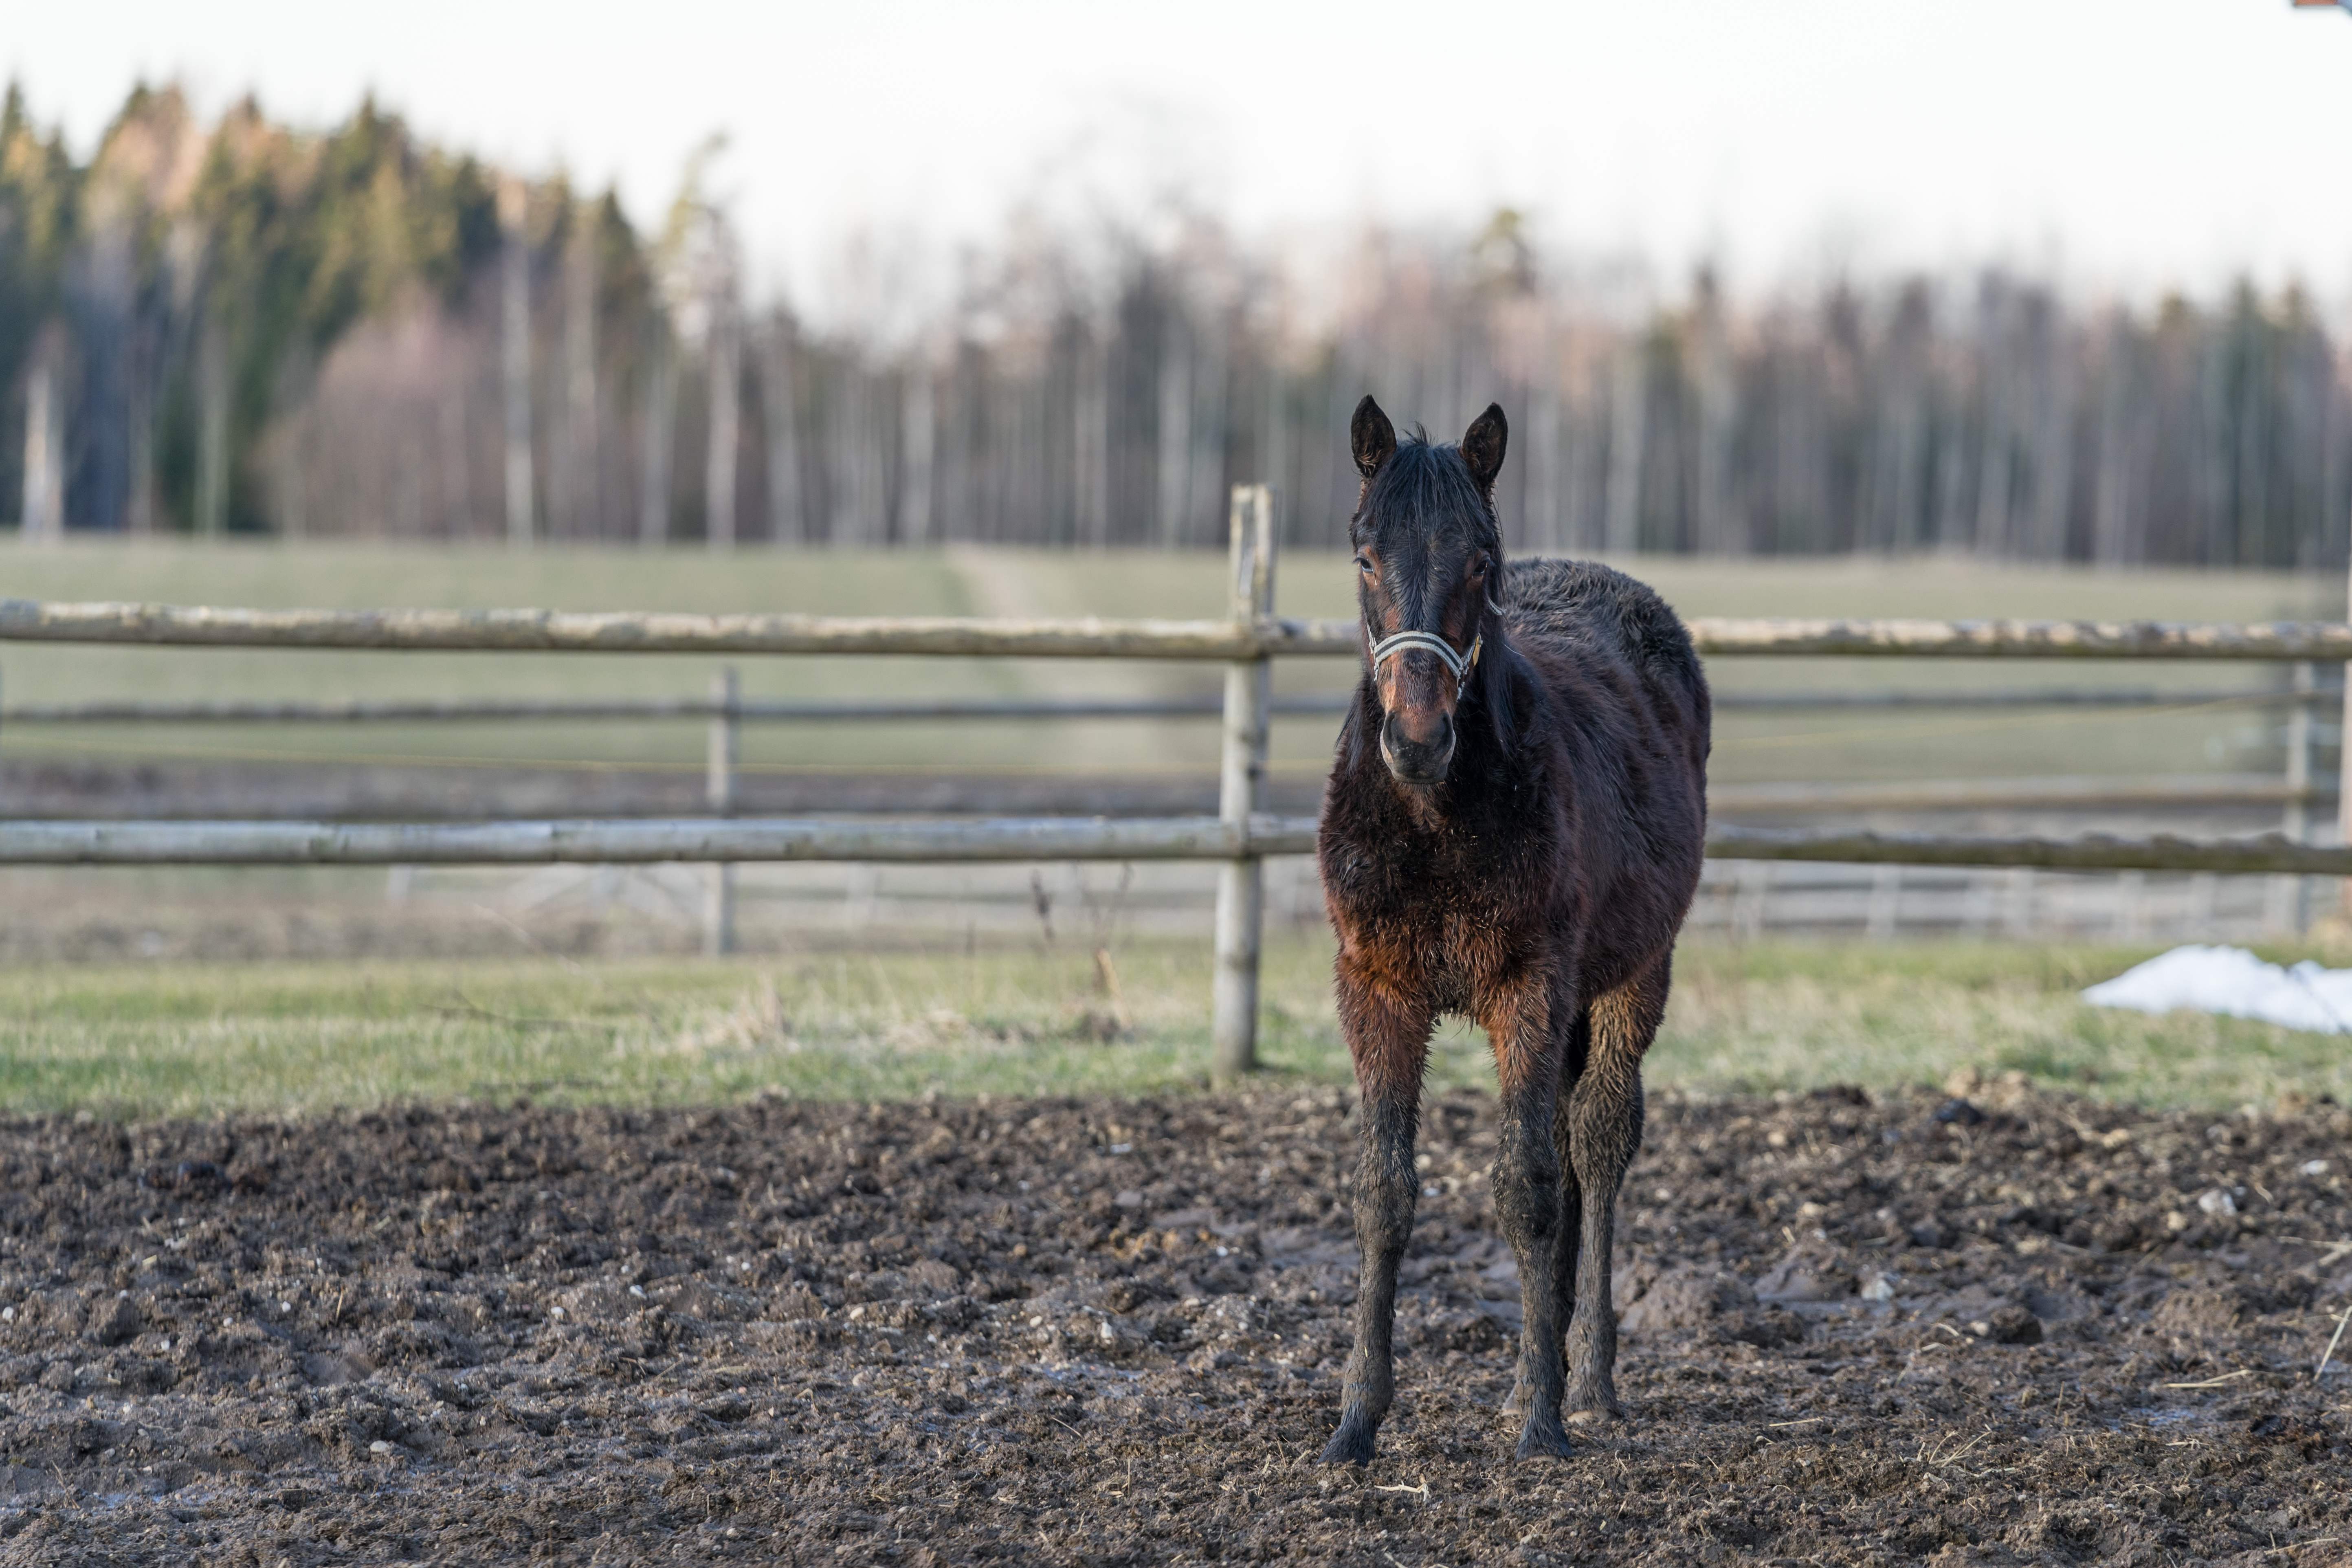 A horse standing in a muddy field.
